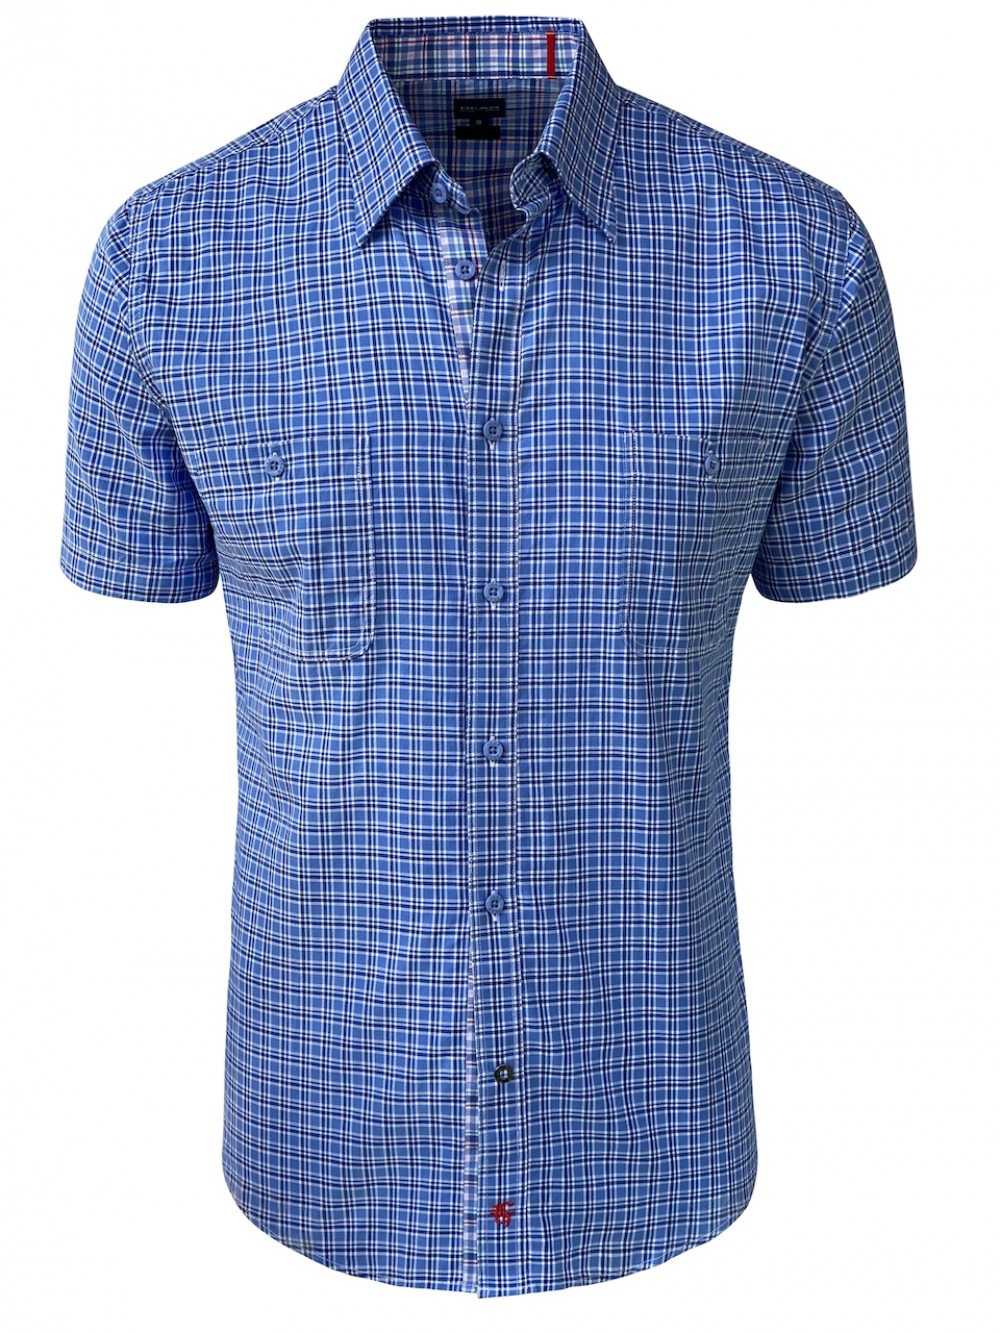  CRISTIAN SHM1298 Cotton Slim Fit Shirt blue